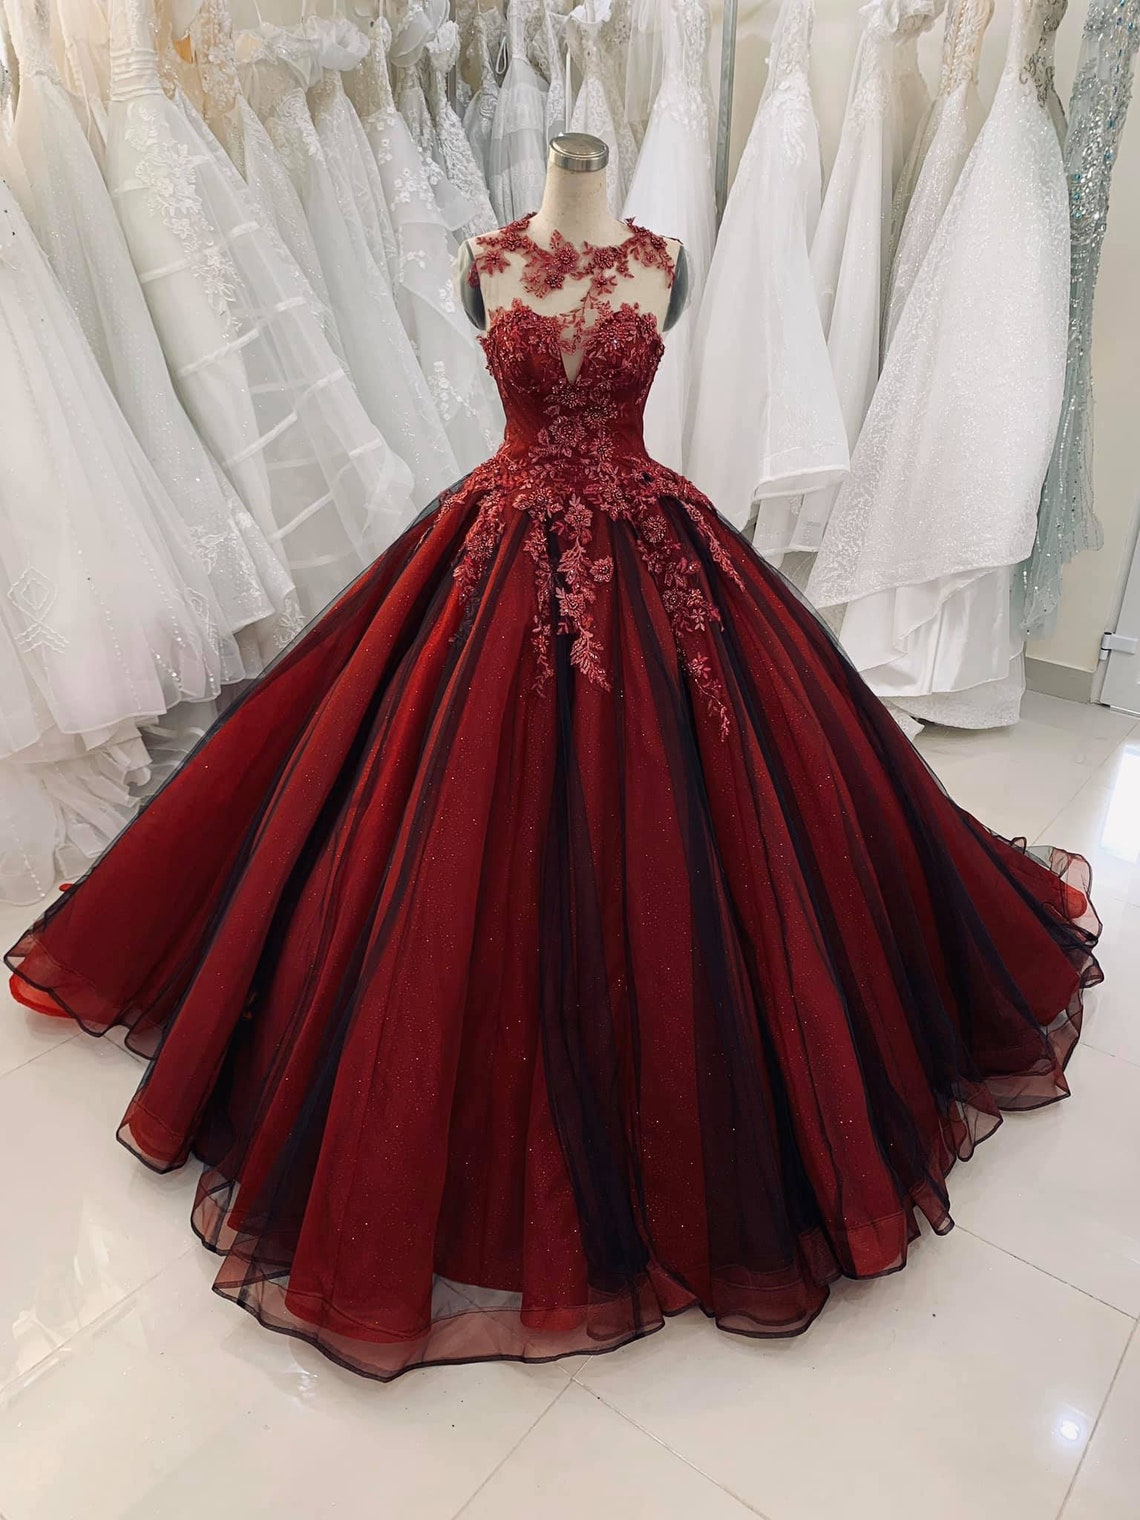 Unique Red Vintage Wedding Dress Made to Measure Wedding image 1